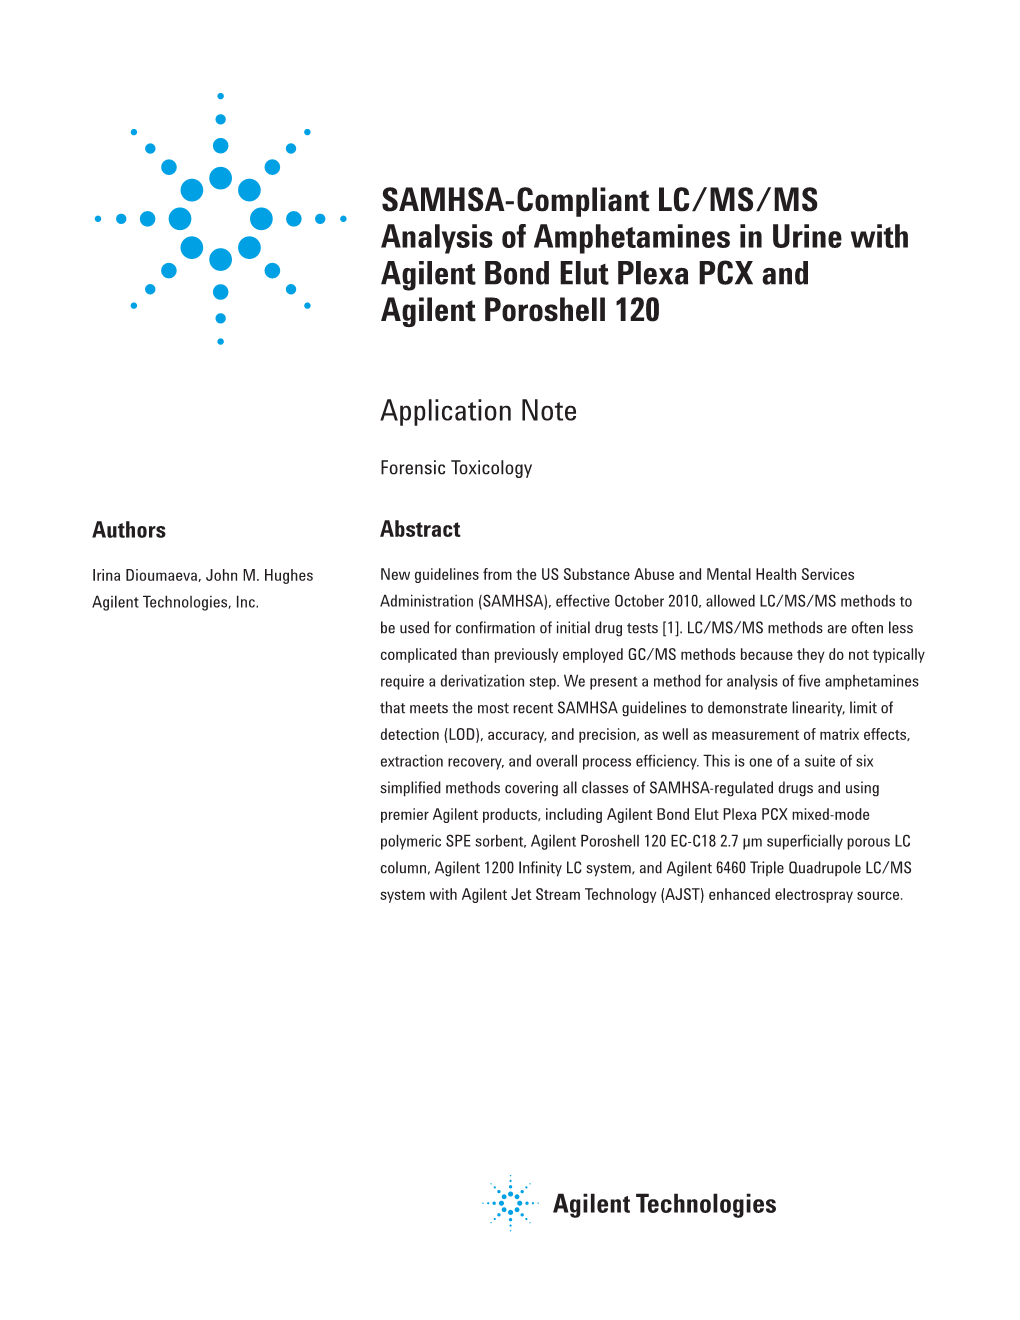 SAMHSA-Compliant LC/MS/MS Analysis of Amphetamines in Urine with Agilent Bond Elut Plexa PCX and Agilent Poroshell 120